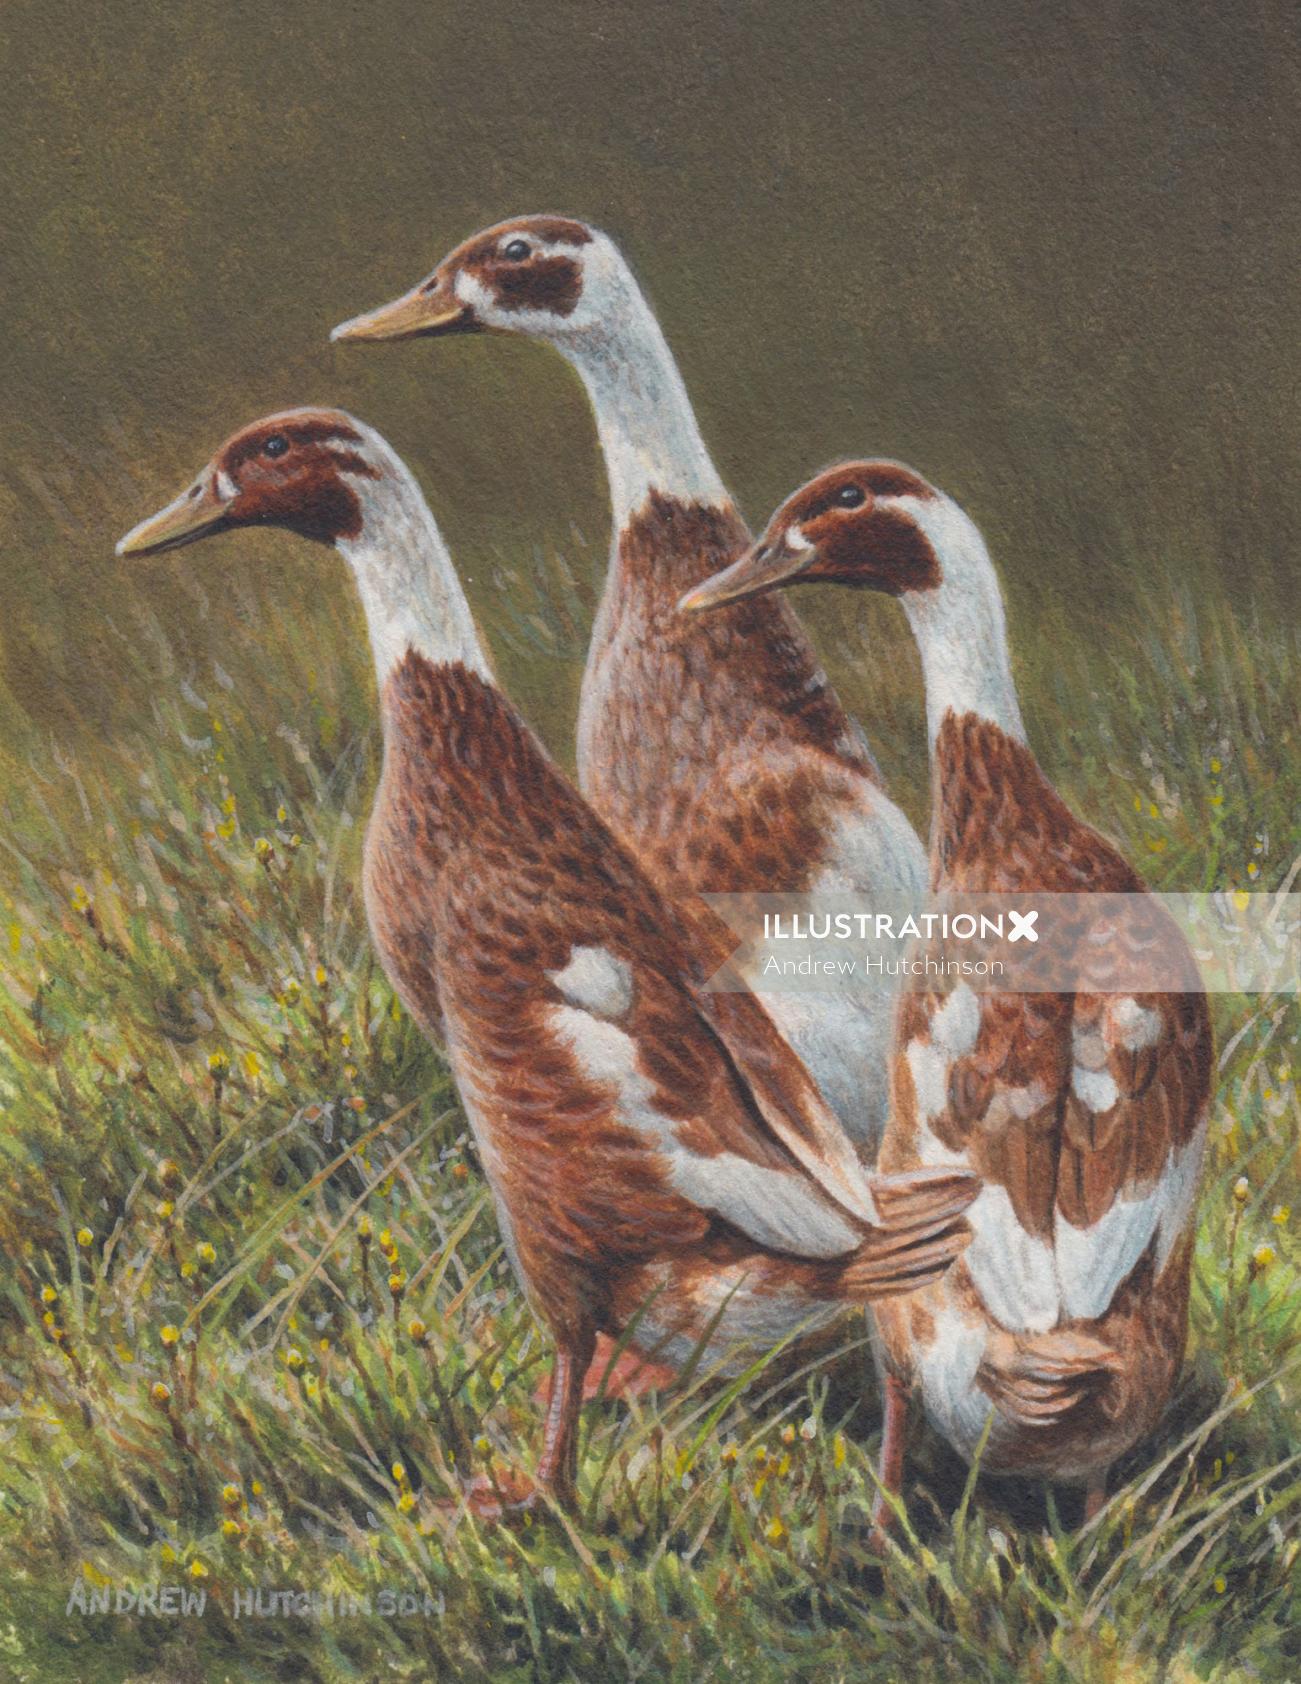 Illustration of Indian Runner ducks